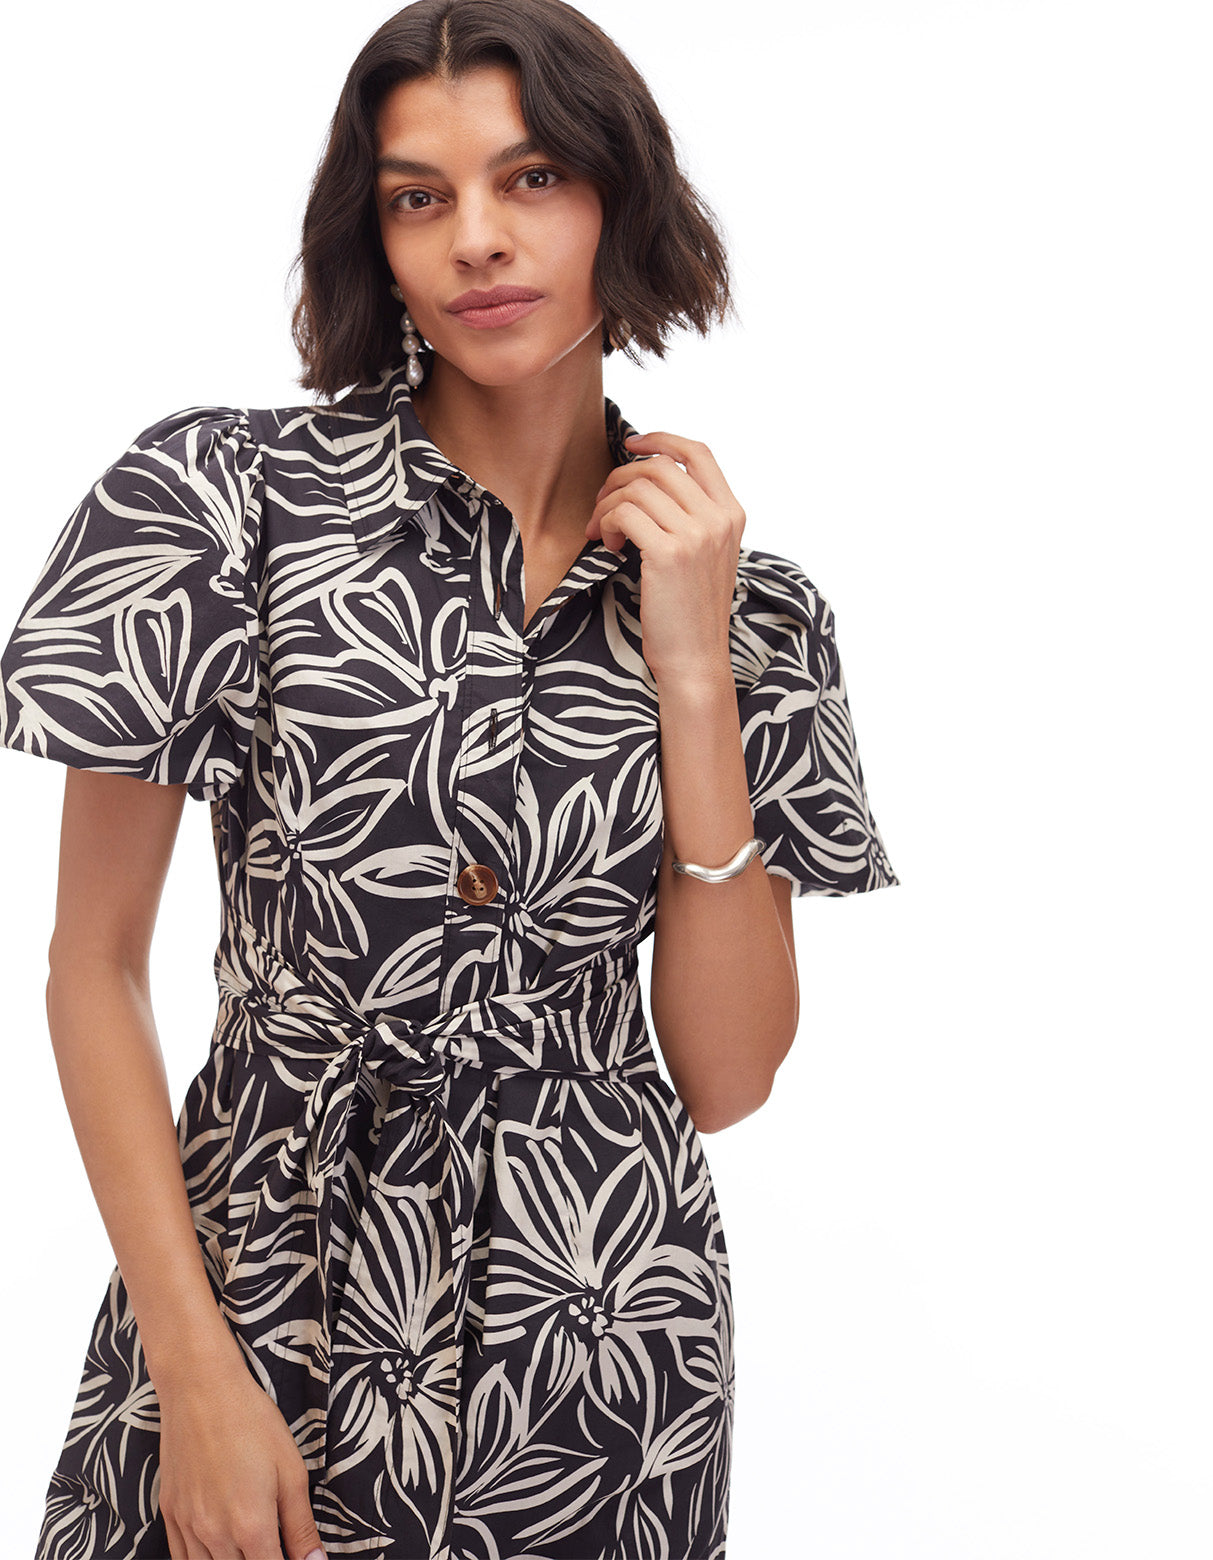 tina tie front short sleeve dark floral shirt mini dress - women's flattering cute vacation dresses designer fashion